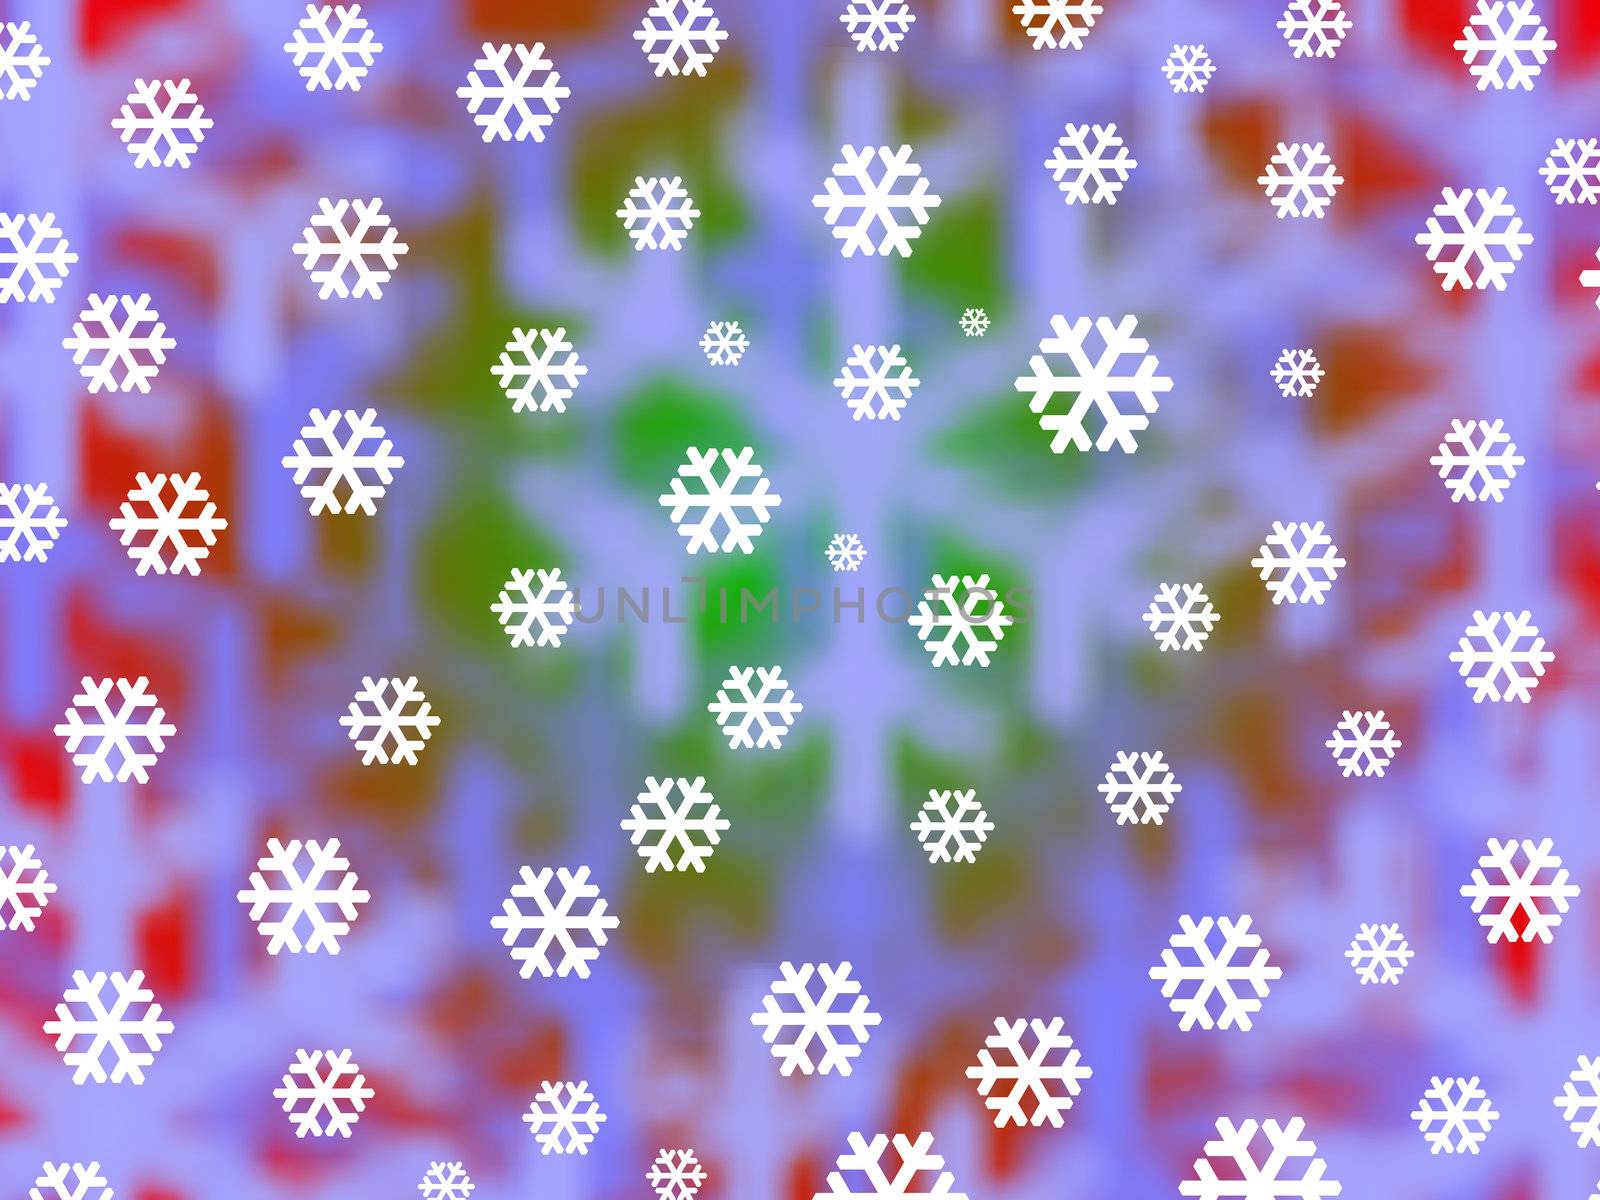 Snowflake pattern by tommroch